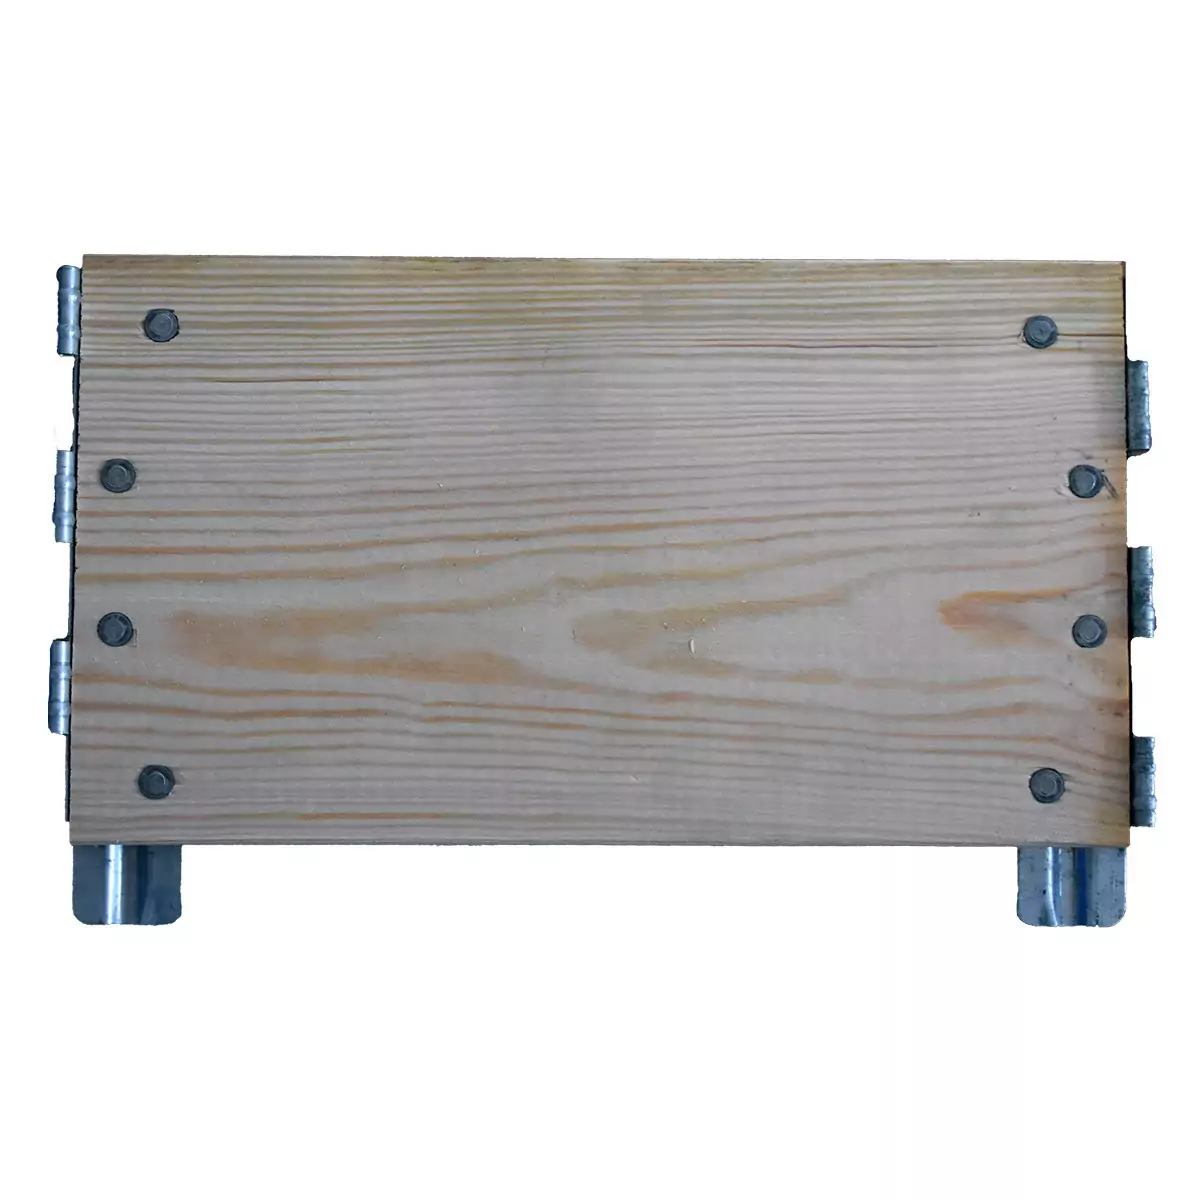 Extension board pallet length 40 cm